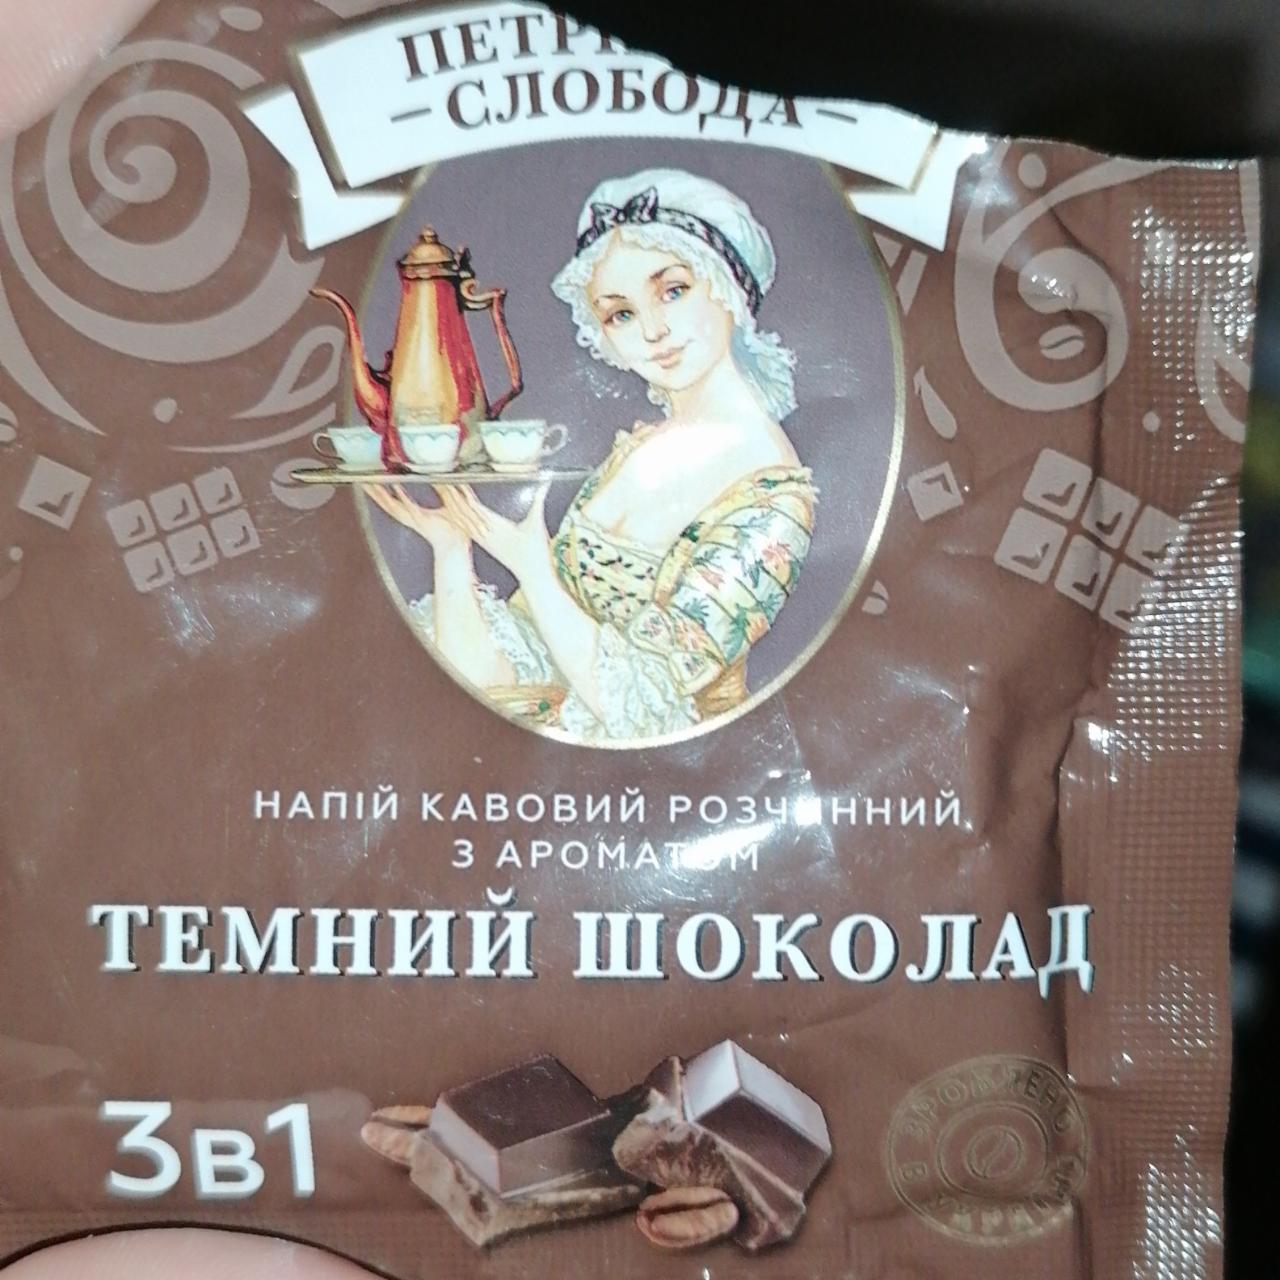 Фото - напиток темний шоколад 3в1 Петровская Слобода